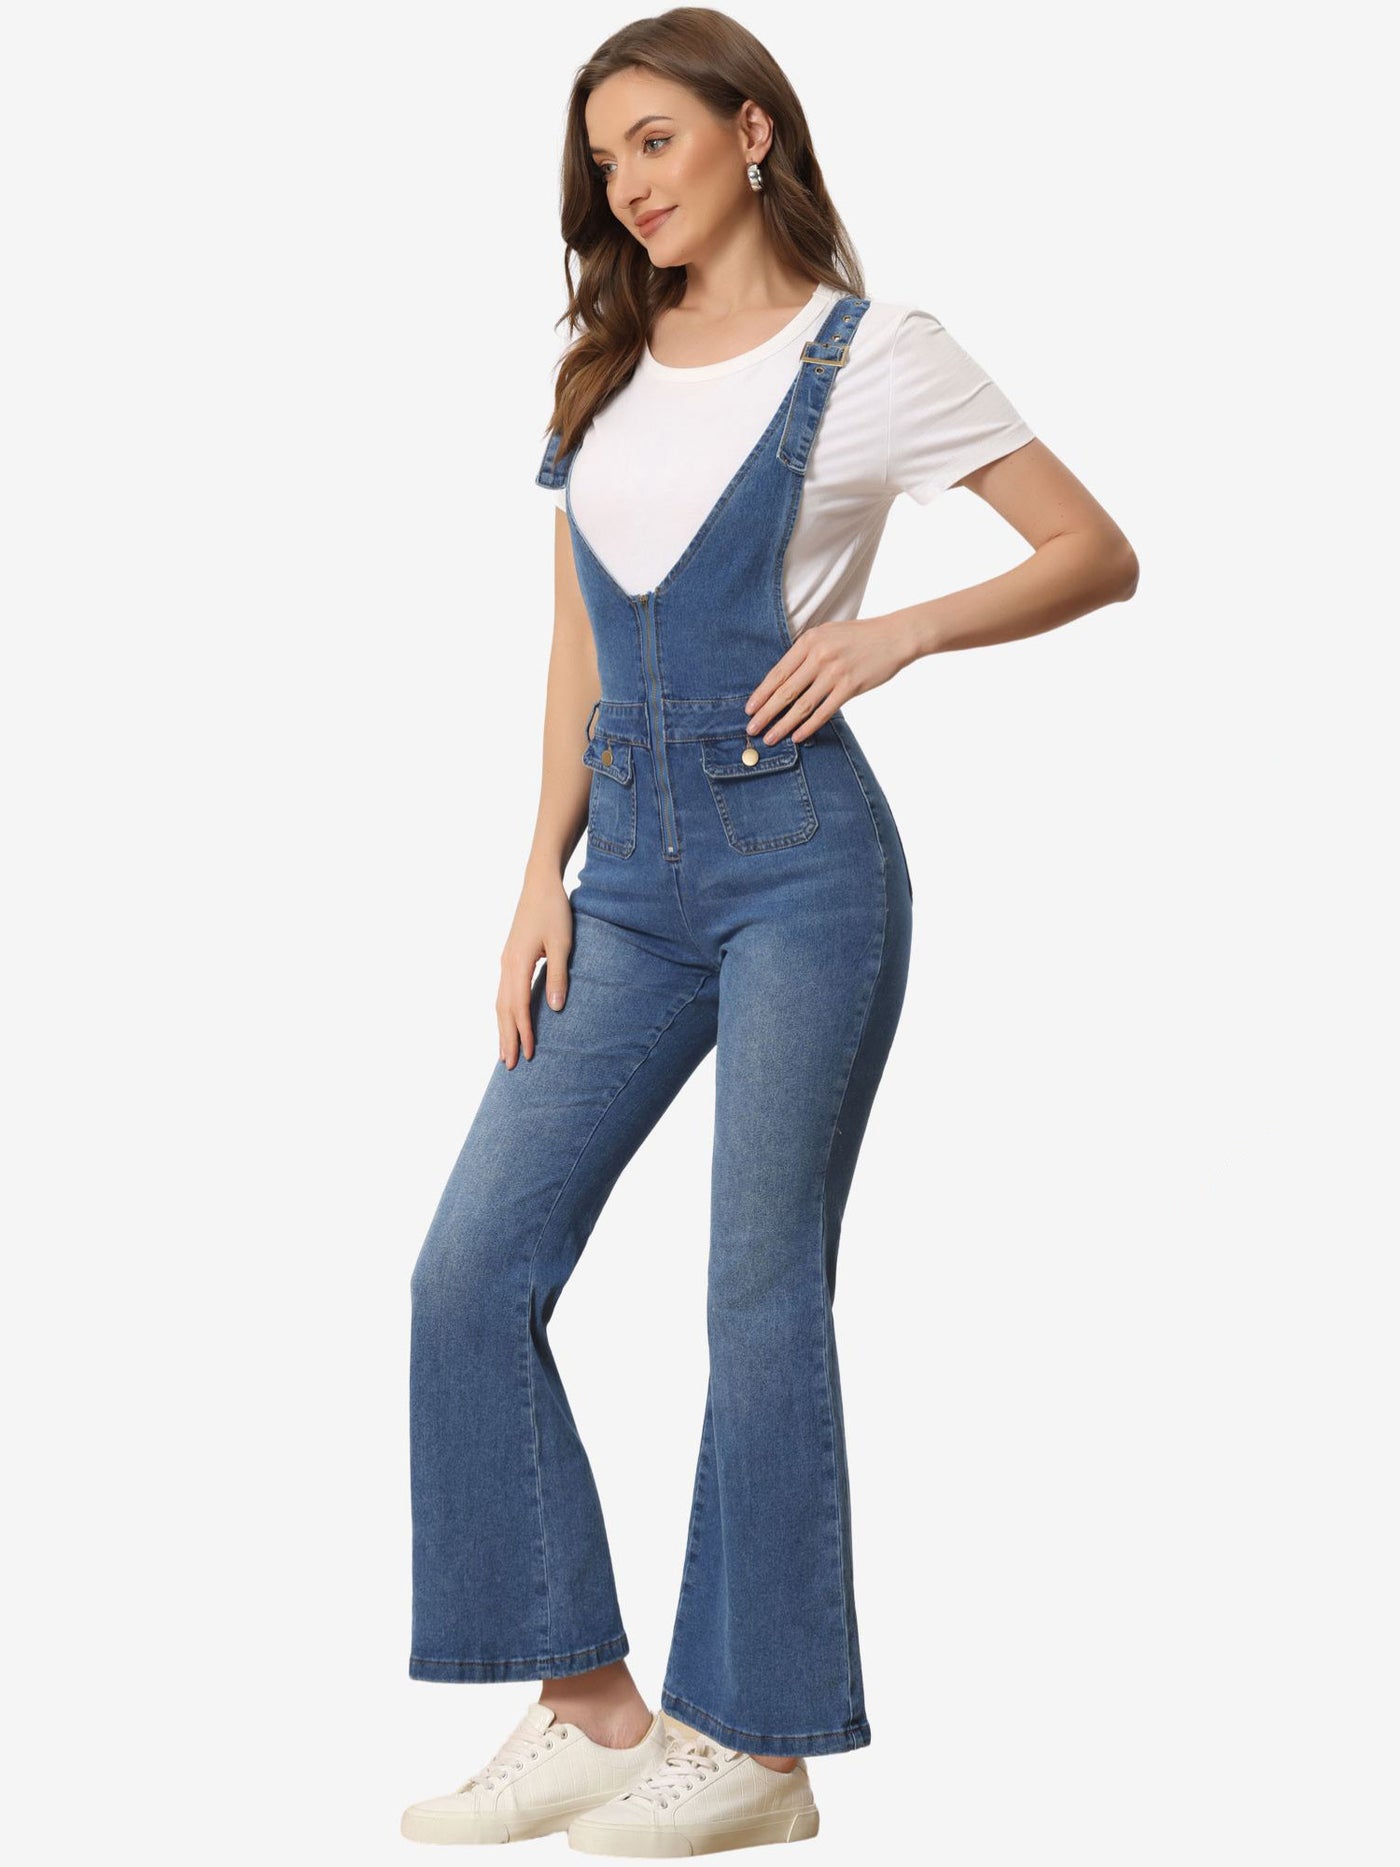 Allegra K Casual Denim Jumpsuits V Neck Zip Up Bell Bottom Jeans Overall